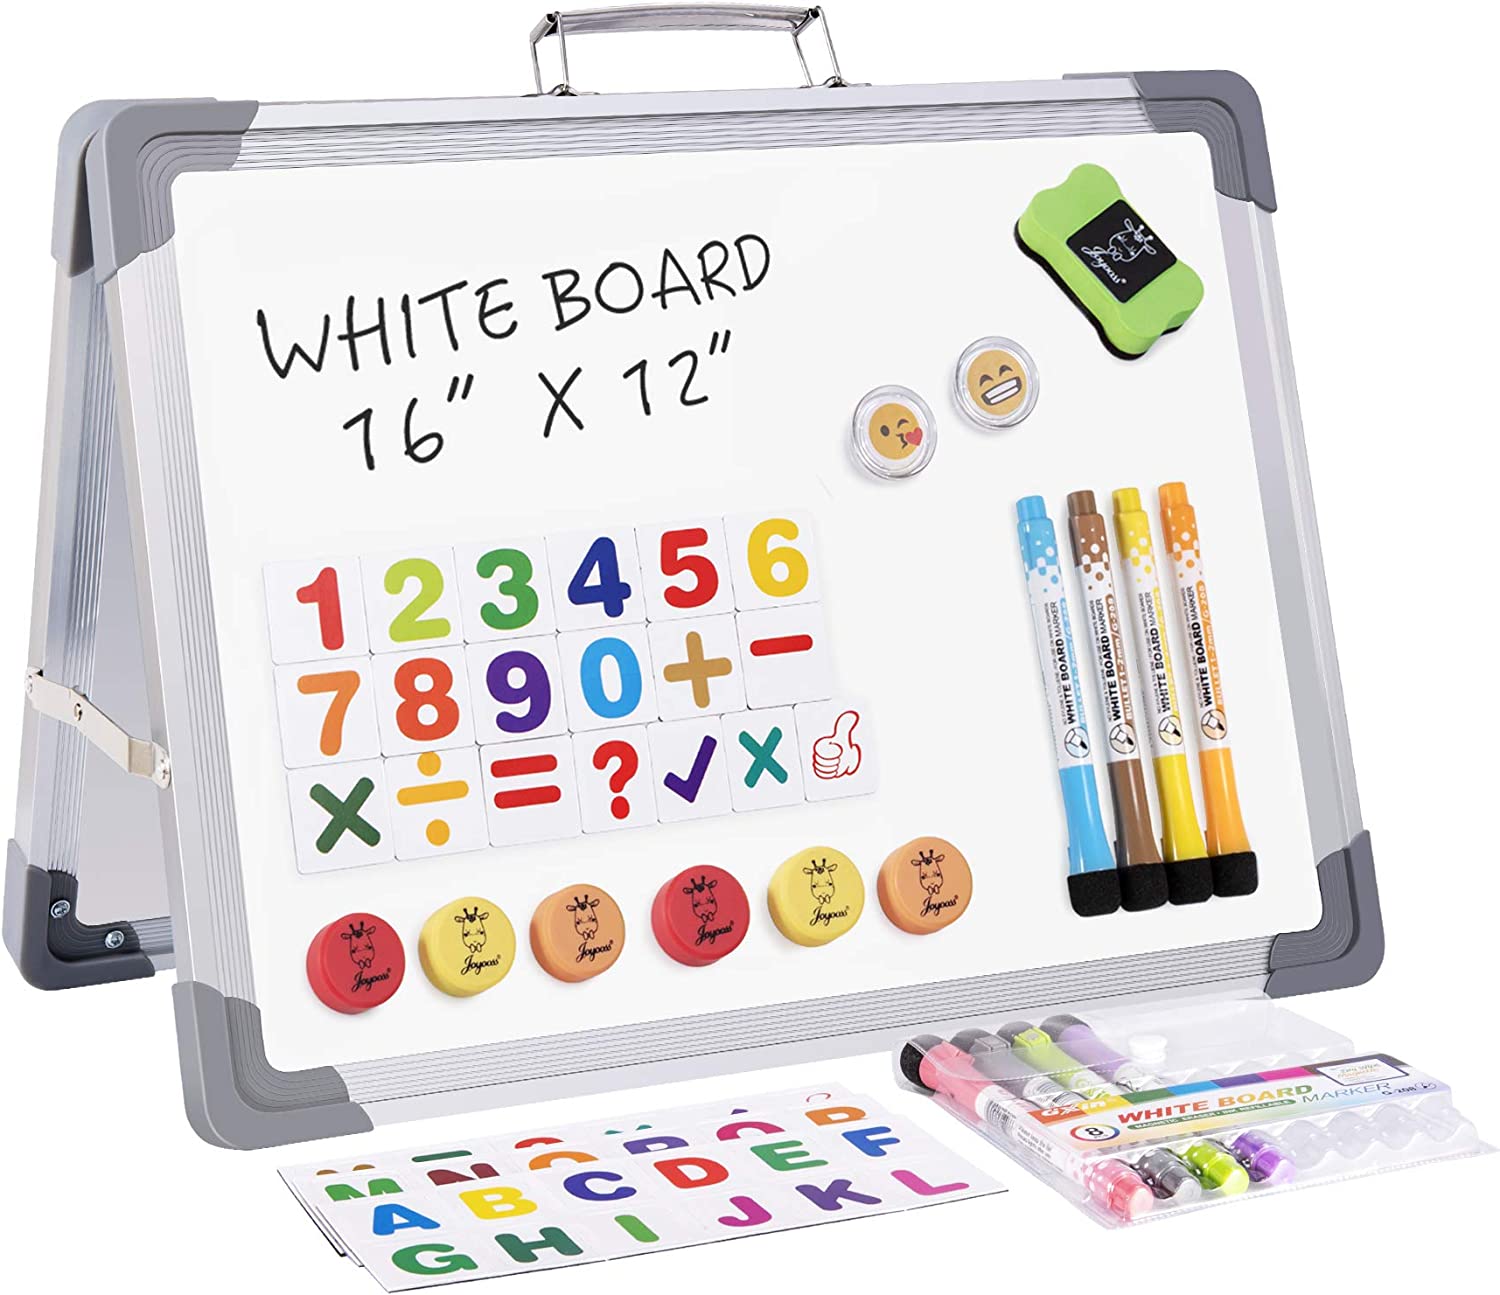 Kids Magnetic Tabletop Dry Erase Board- 2 sided Easel